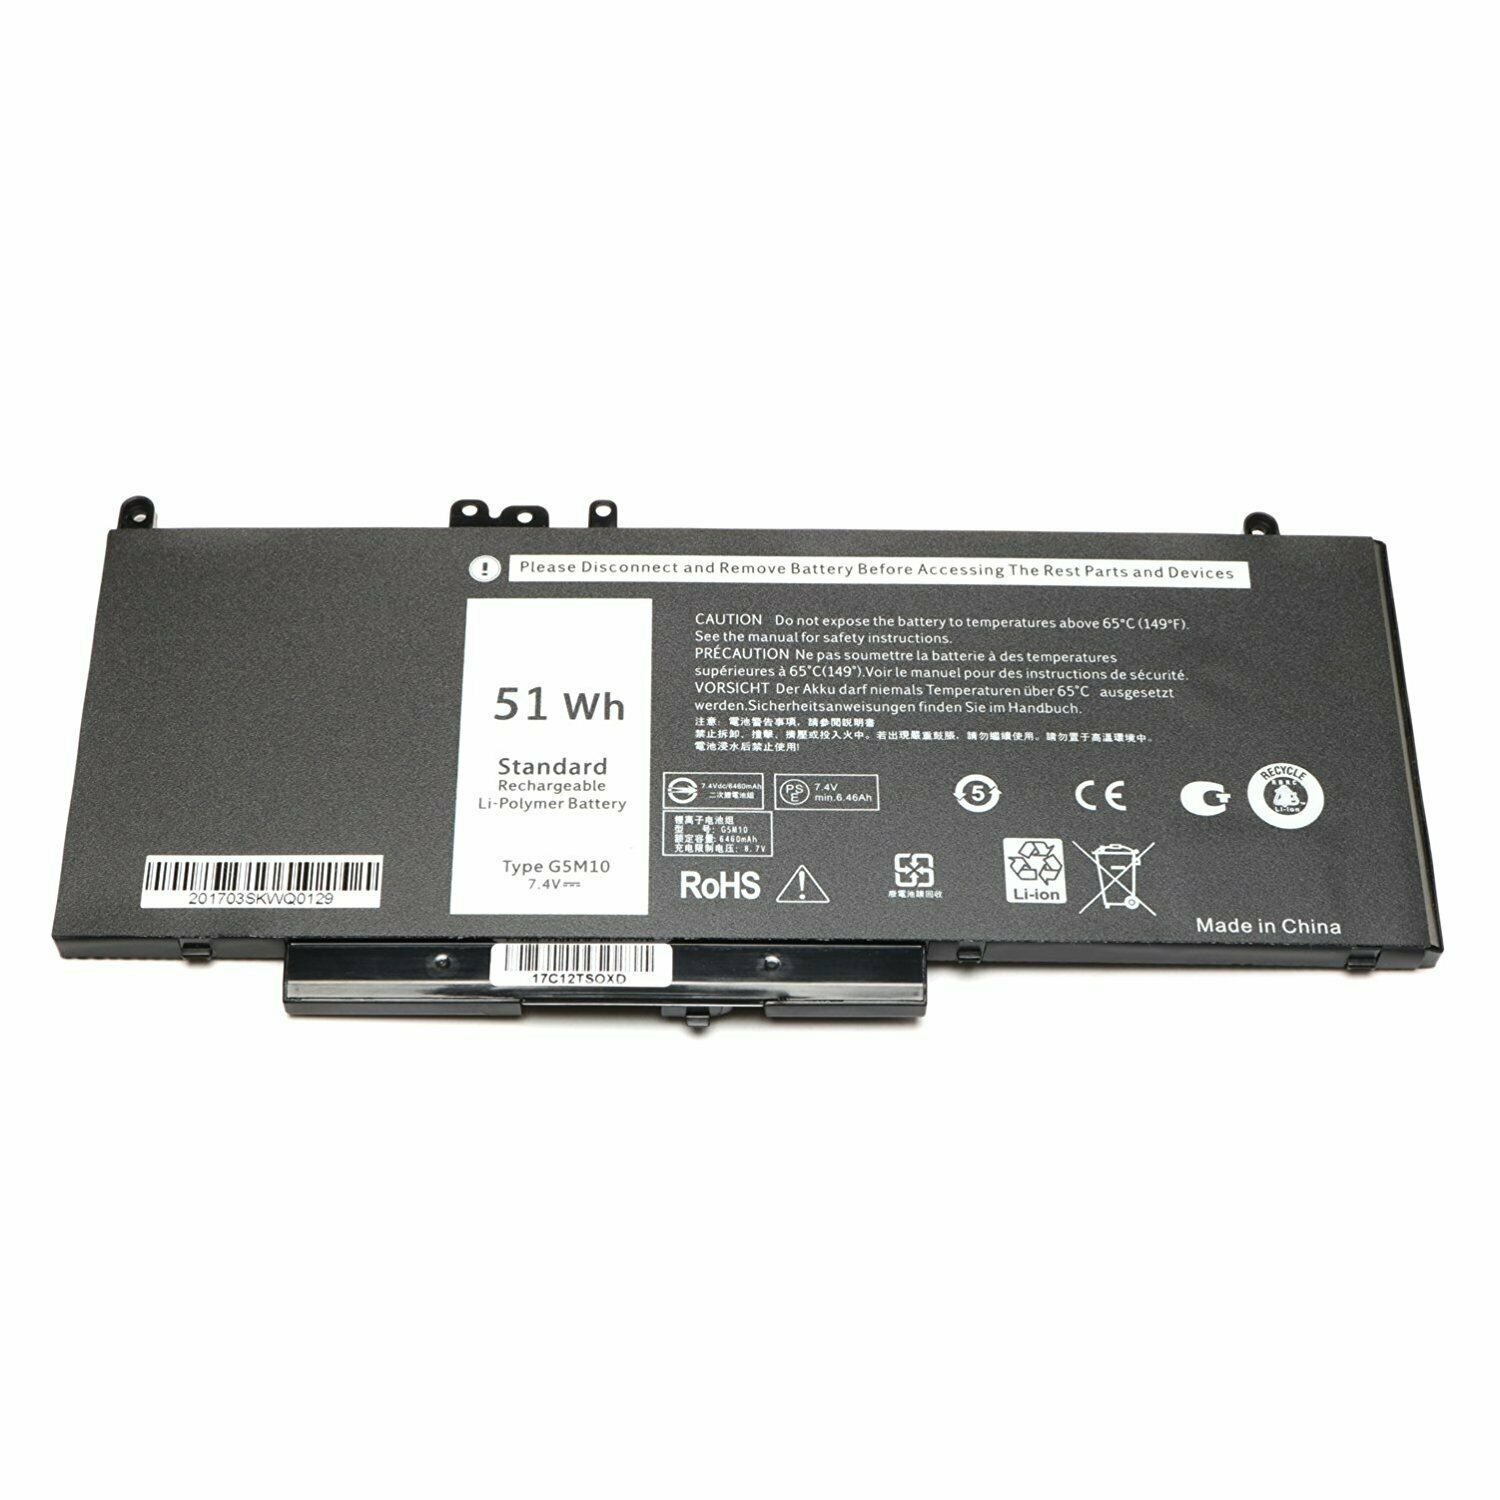 Akku für G5M10 Dell Latitude E5550 E5450 Notebook 15.6"(Ersatz)